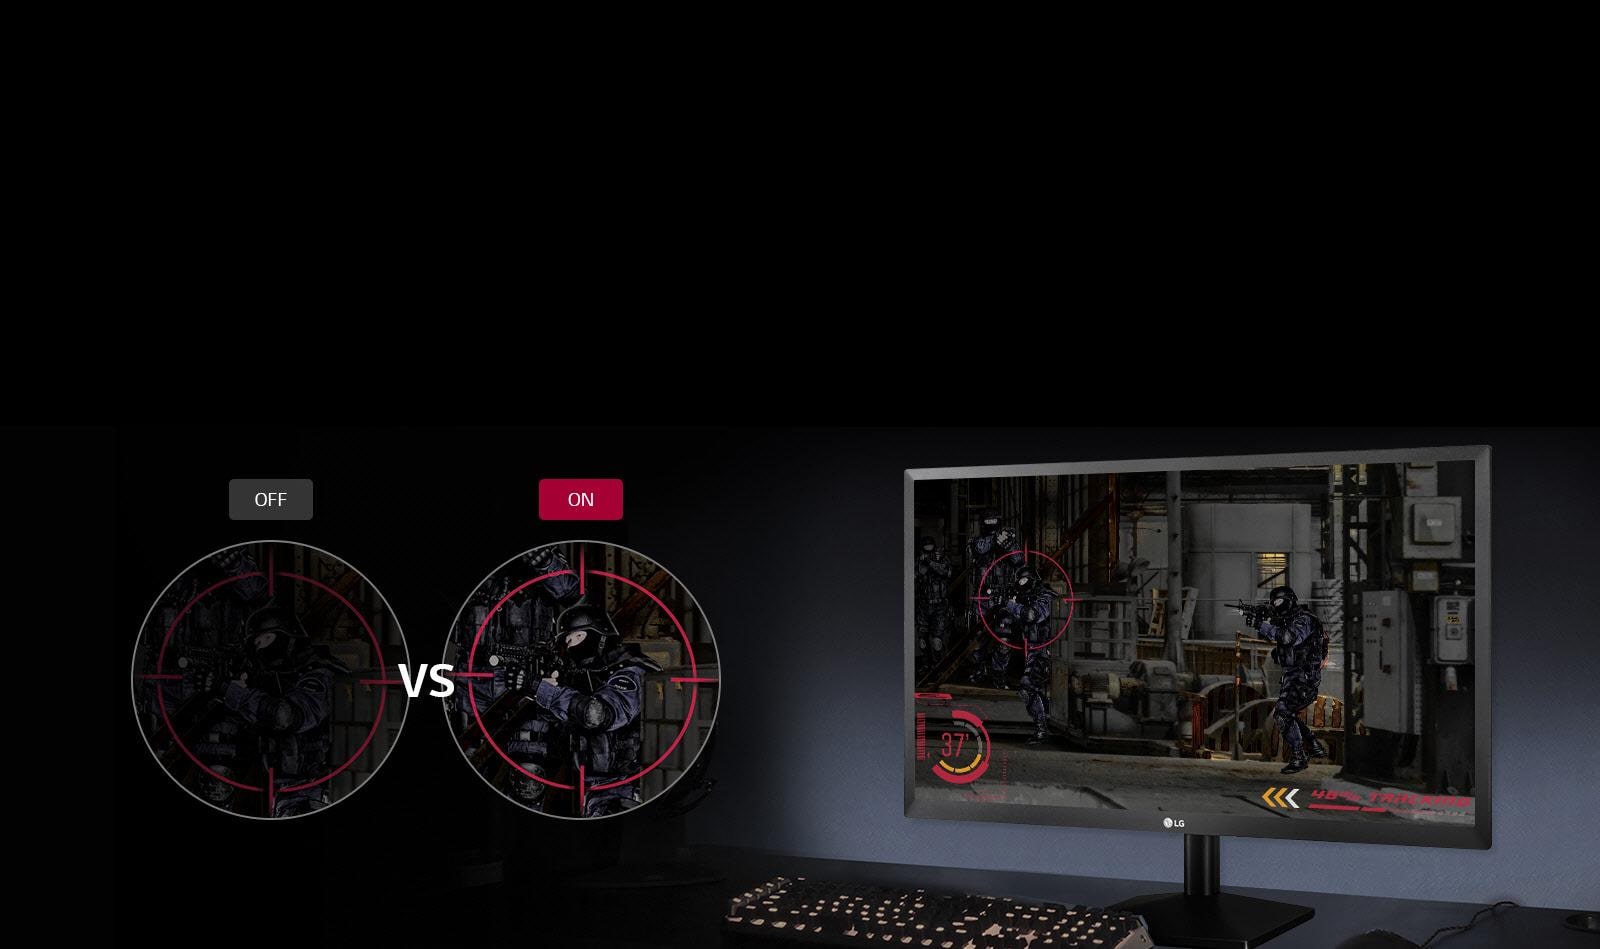 LG 24'' Class Full HD IPS LED Monitor with AMD FreeSync - 24MK430H-B